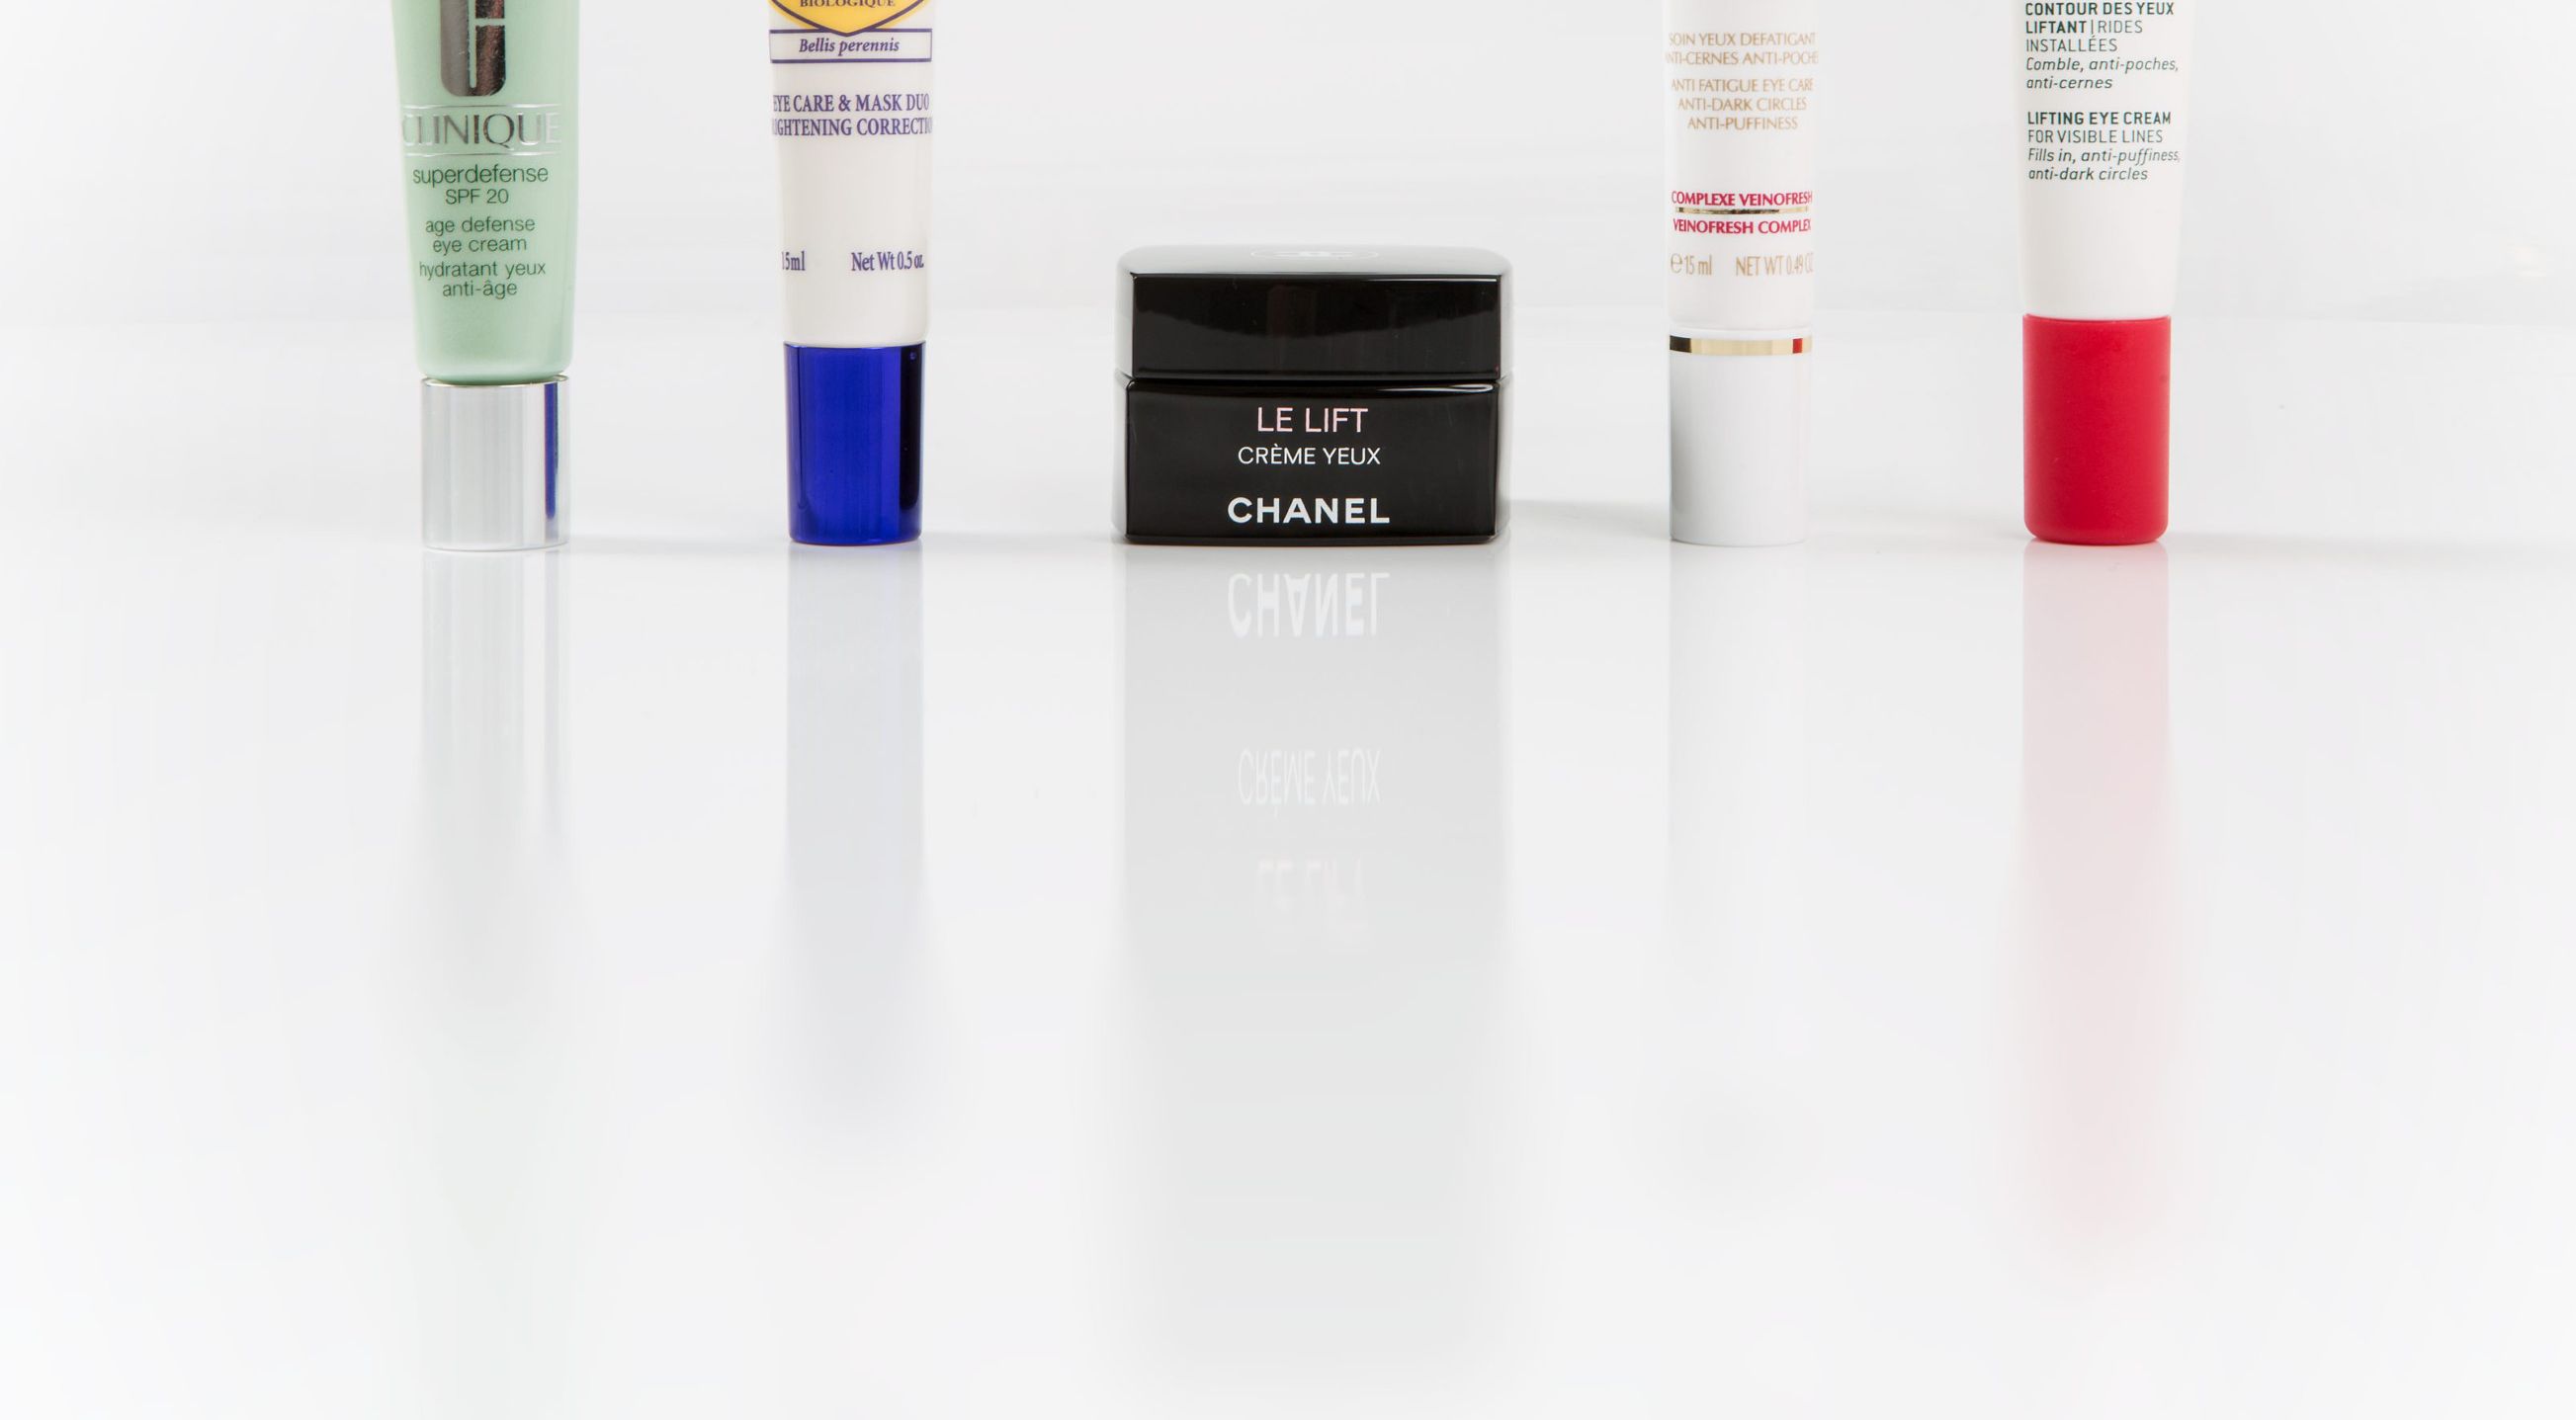 Eye Cream - Chanel Le Lift Creme Yeux Botanical Alfalfa Concentrate  (prybka)